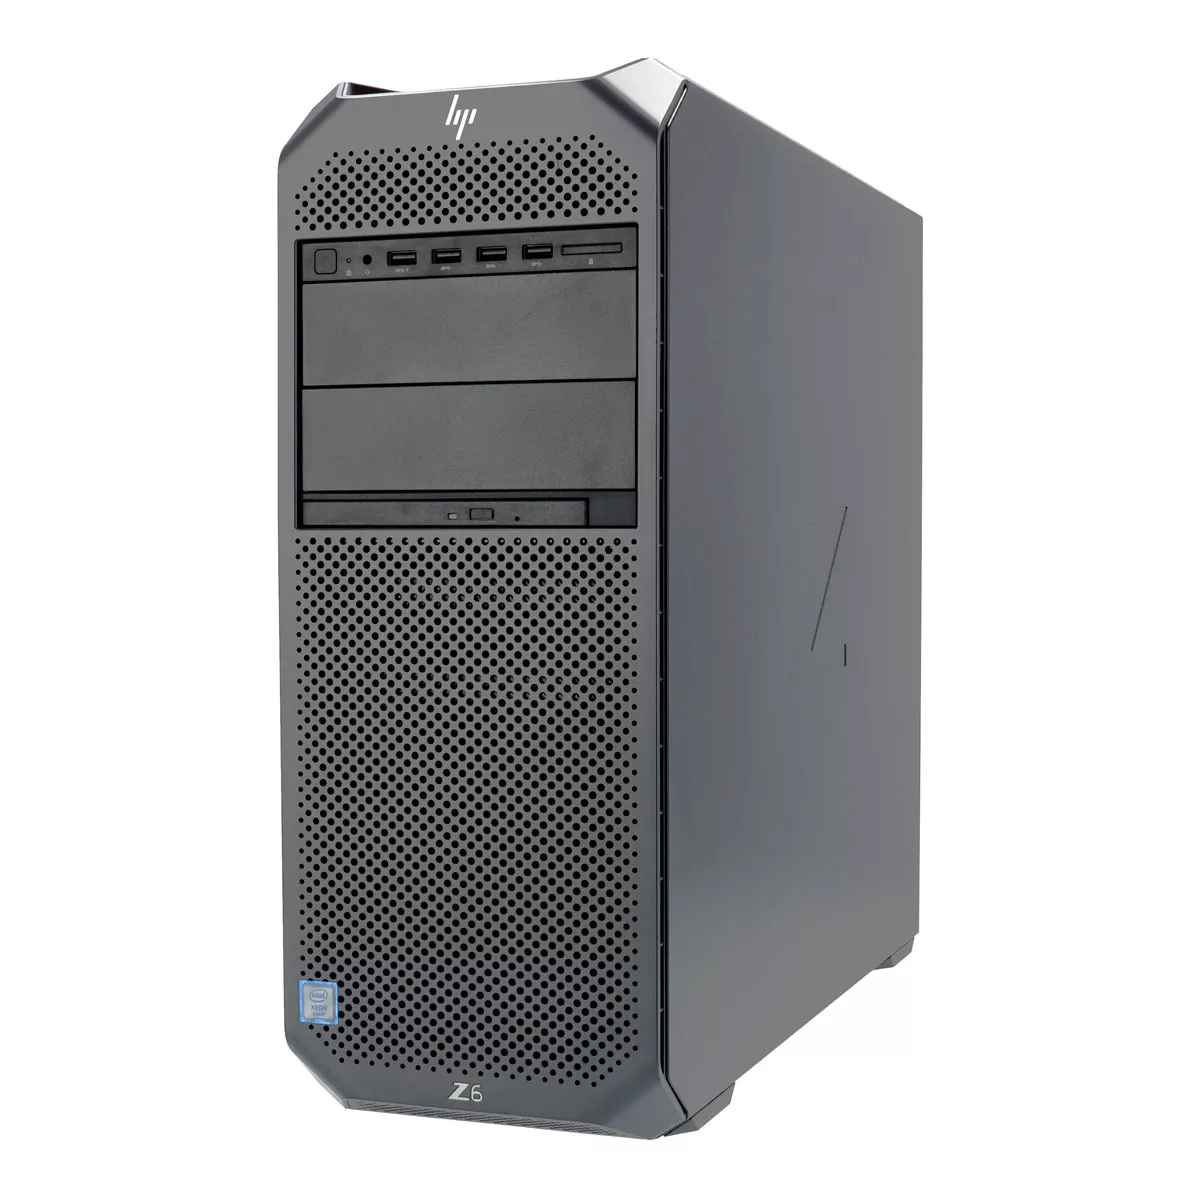 HP Z6 G4 Xeon QuadCore Silver 4112 nVidia Quadro P4000 500 GB SSD A+